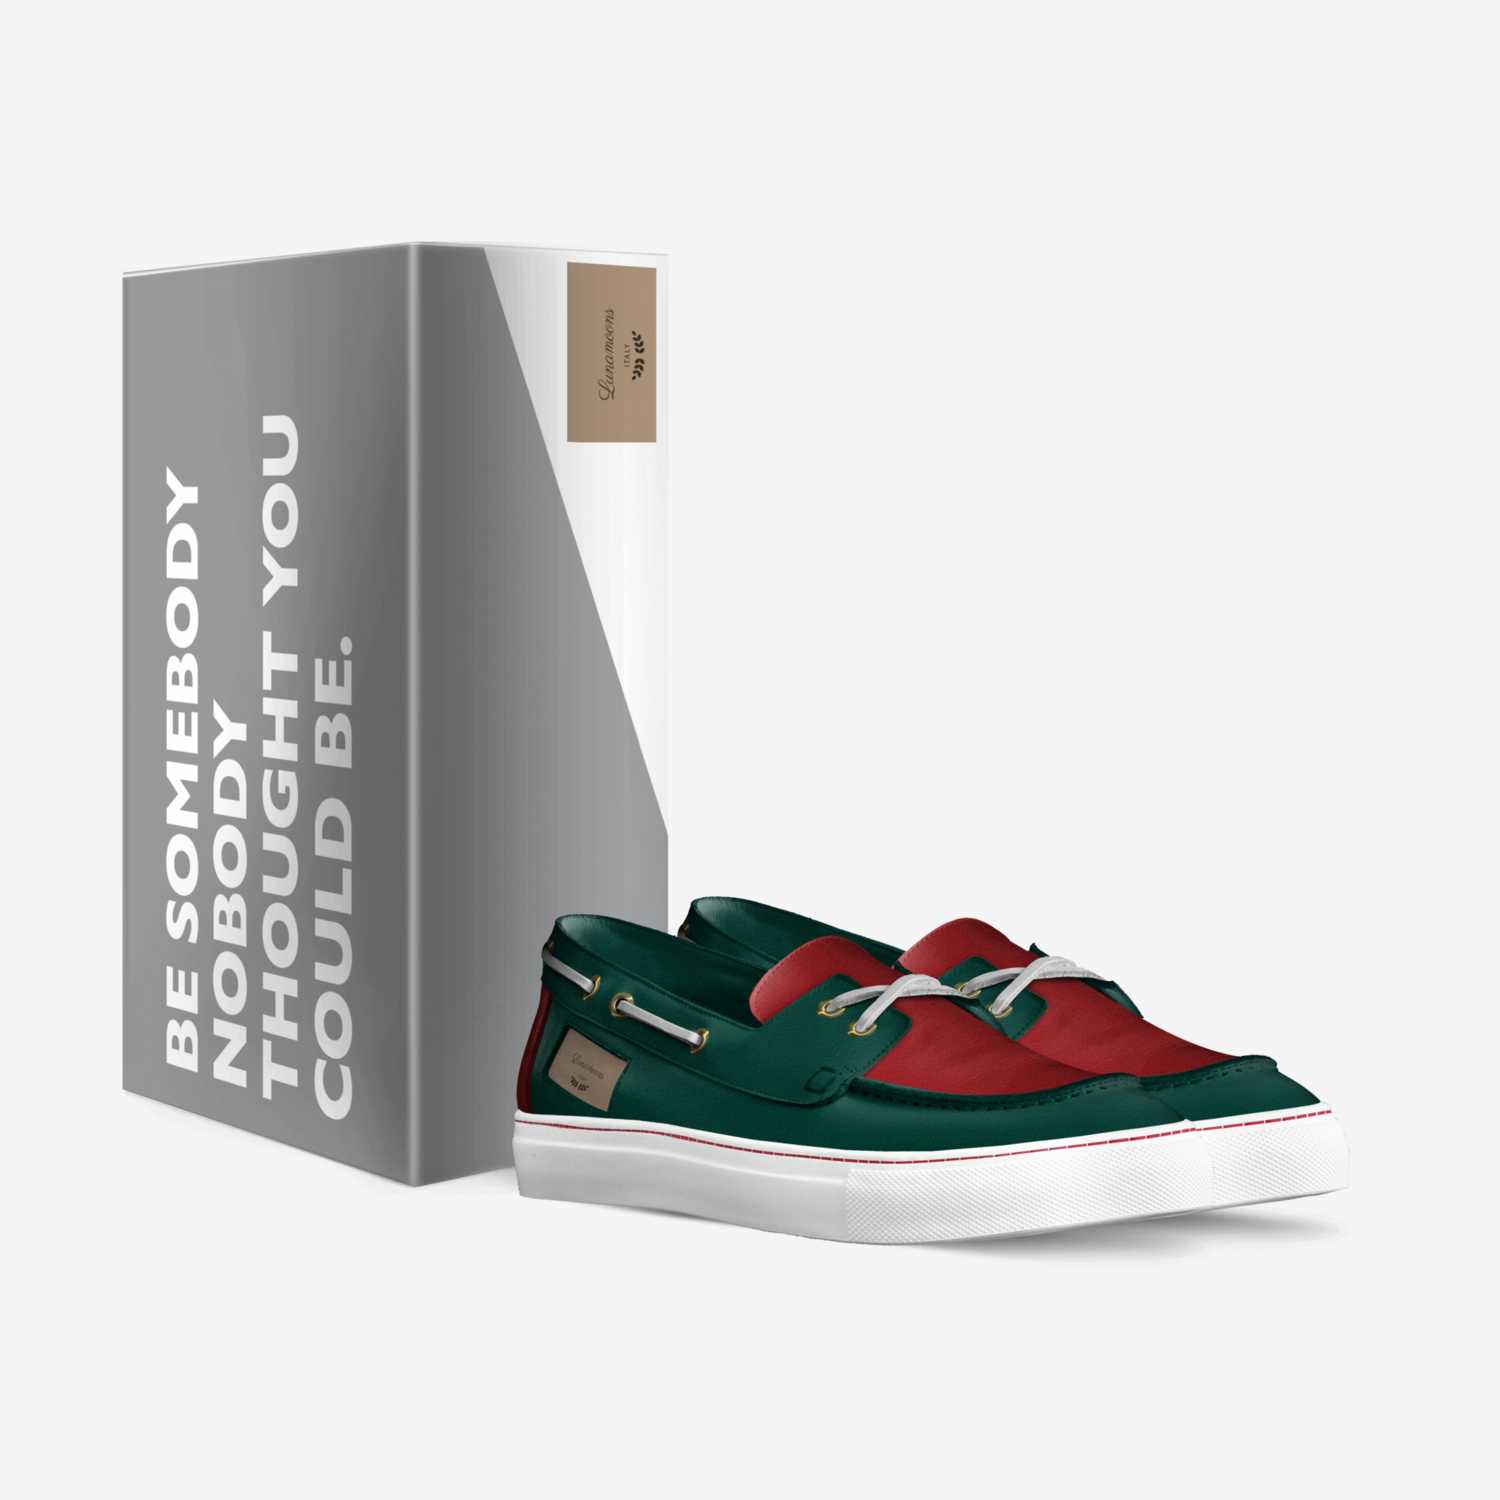 Lunamoons custom made in Italy shoes by Gabriella A Thomas | Box view